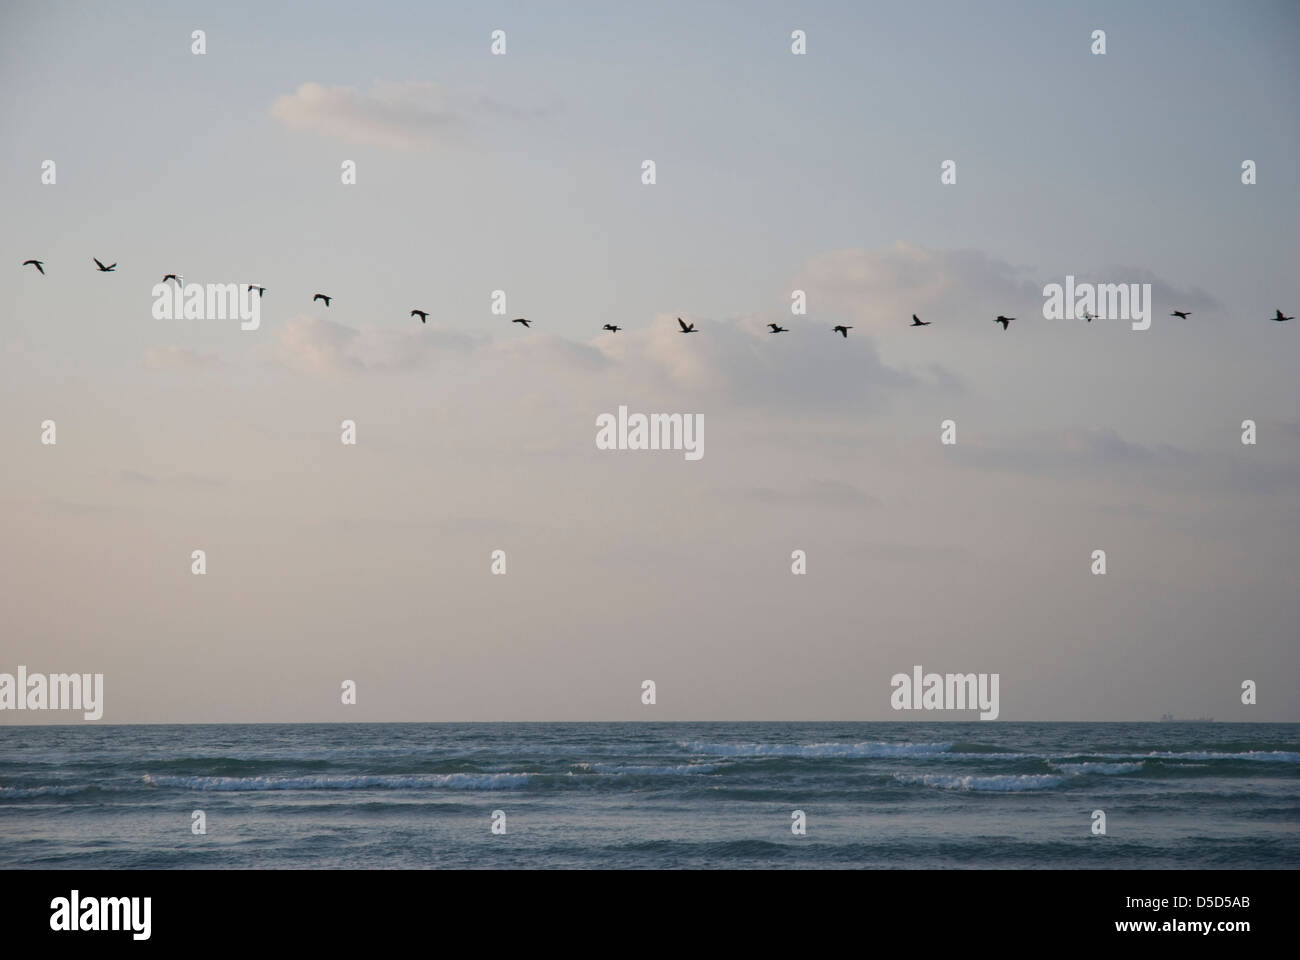 Wild duck flying over the sea, Arabian Gulf Stock Photo